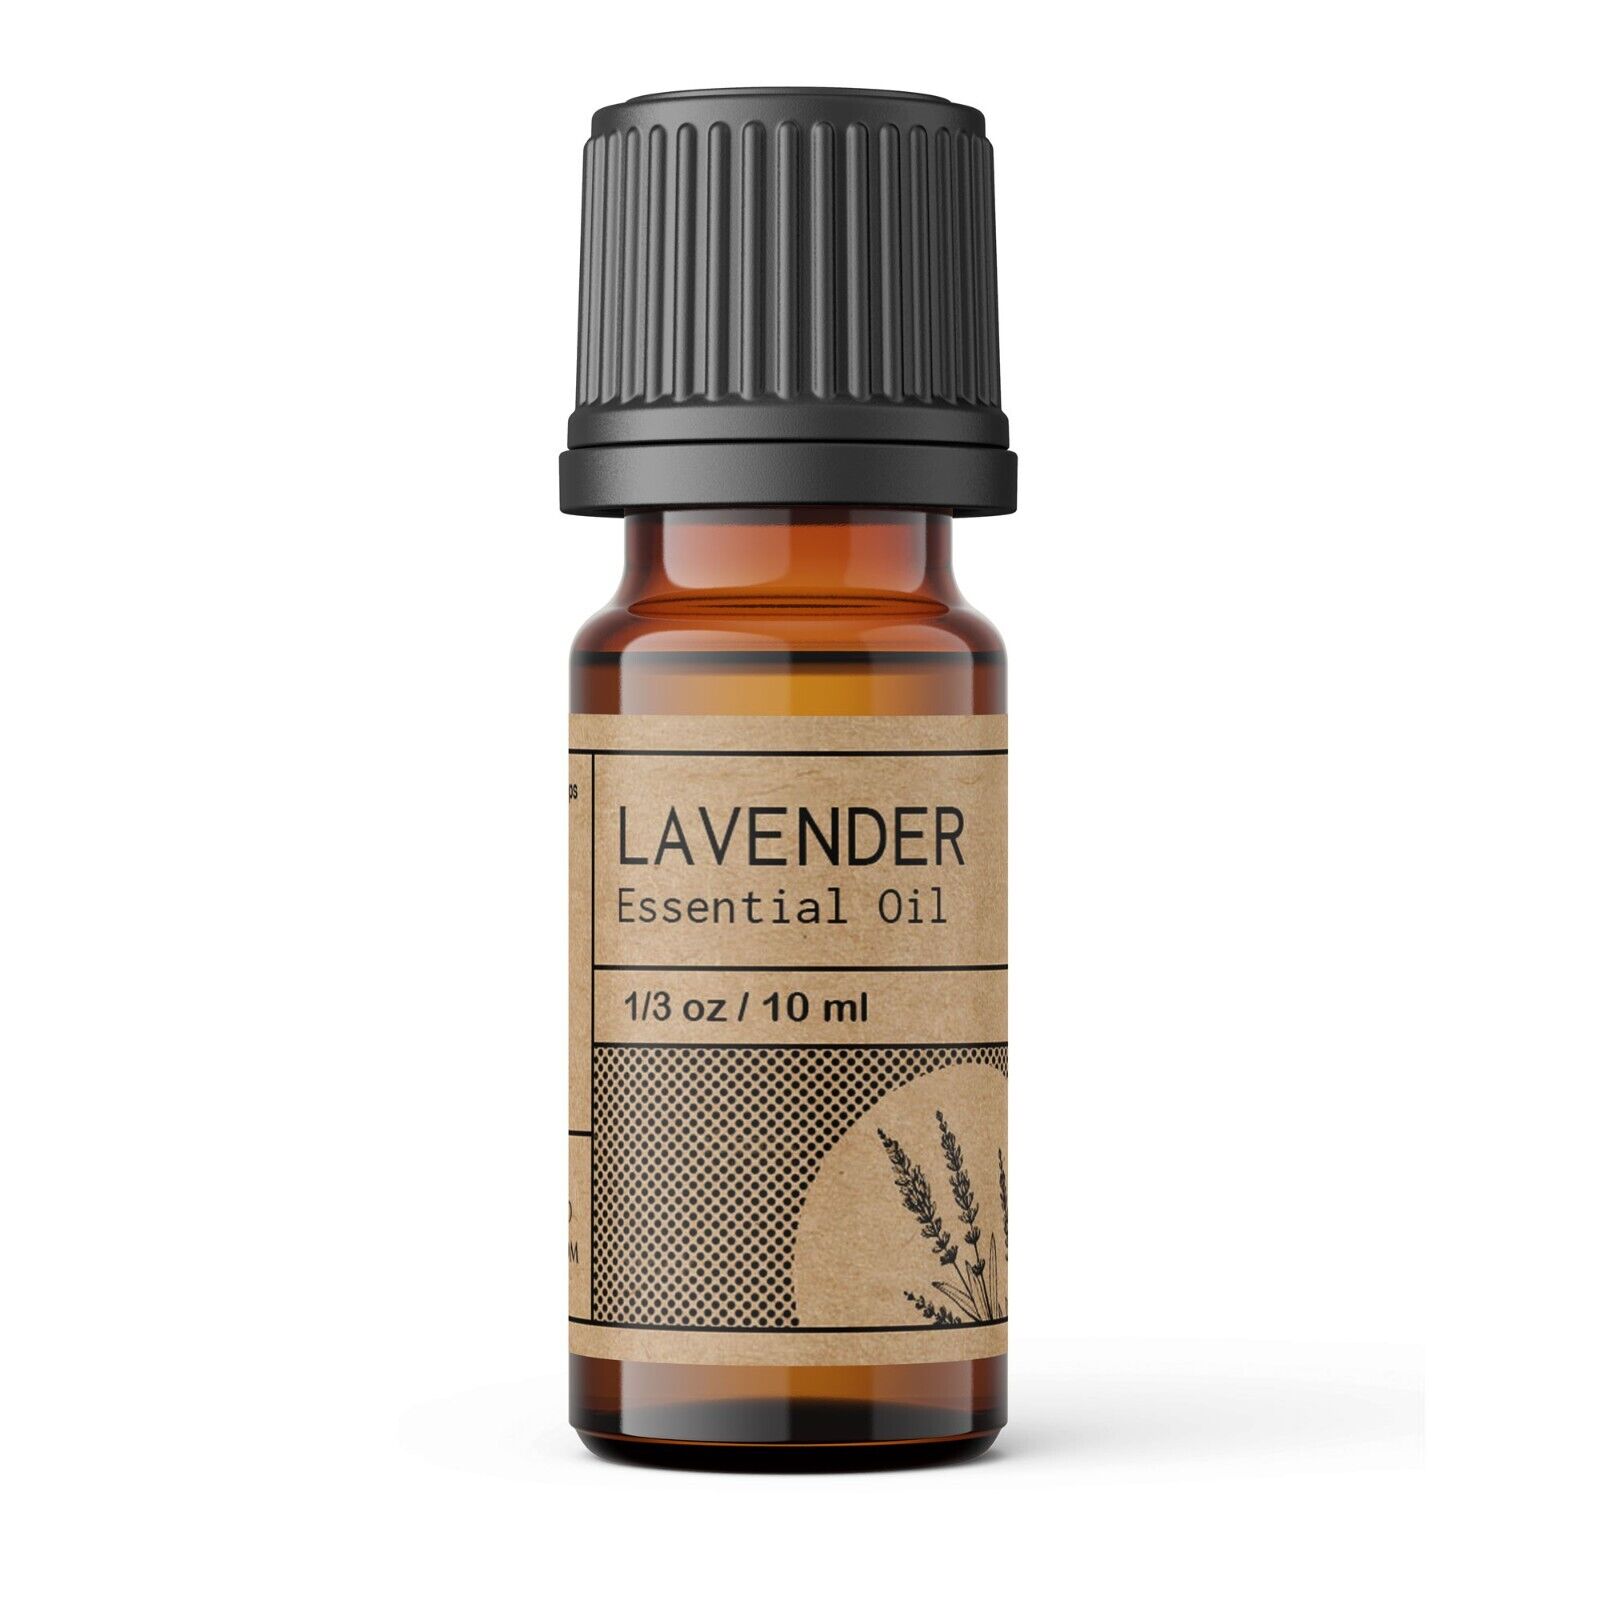 Lavender Essential Oil (10 ml) - NEW 1/3 oz Bottle